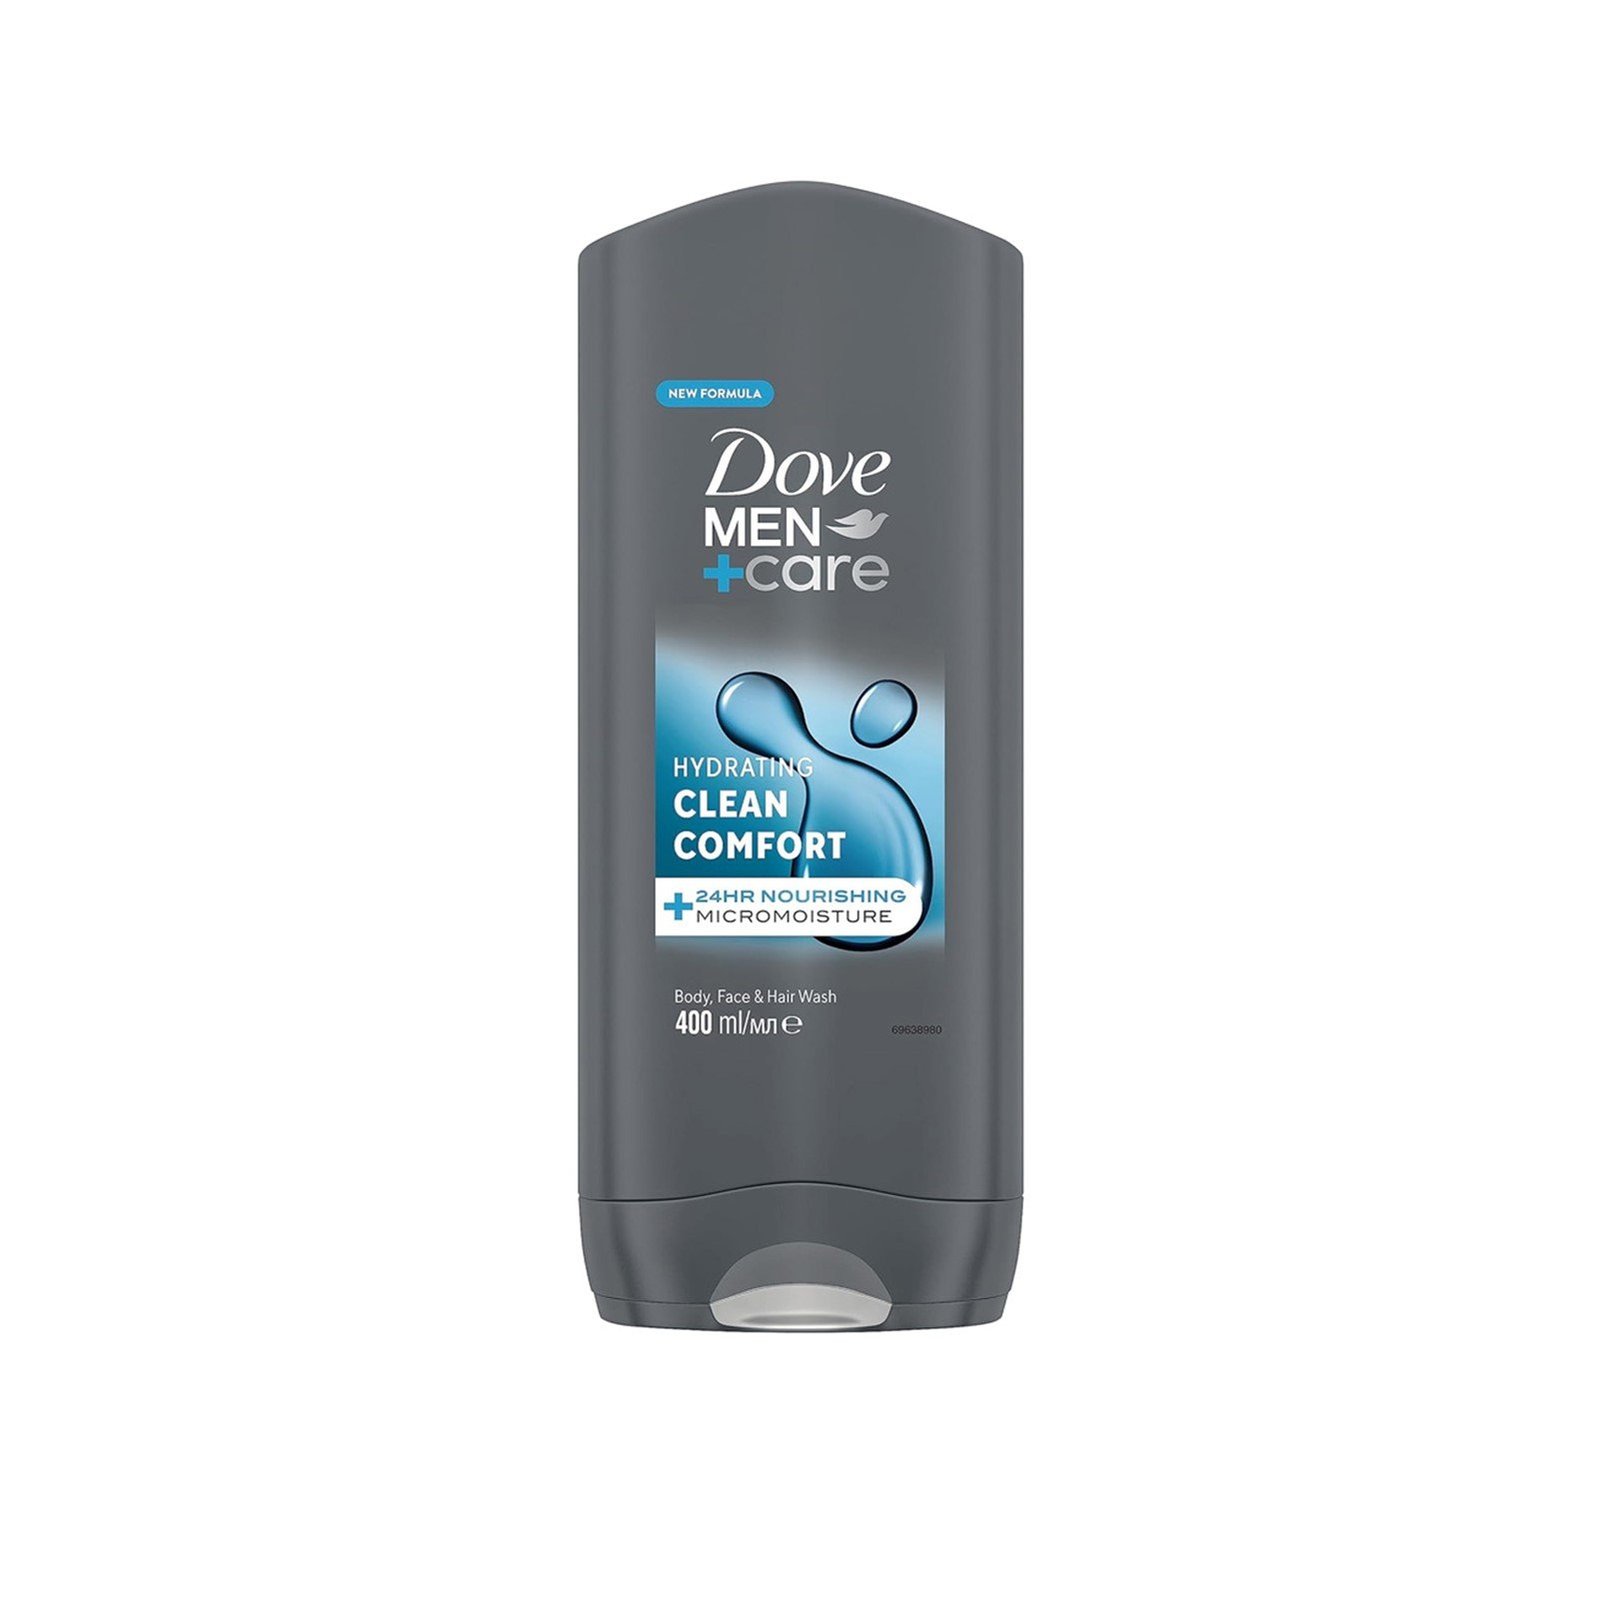 Dove Men+Care Clean Comfort Body, Face & Hair Wash 400ml (13.5floz)